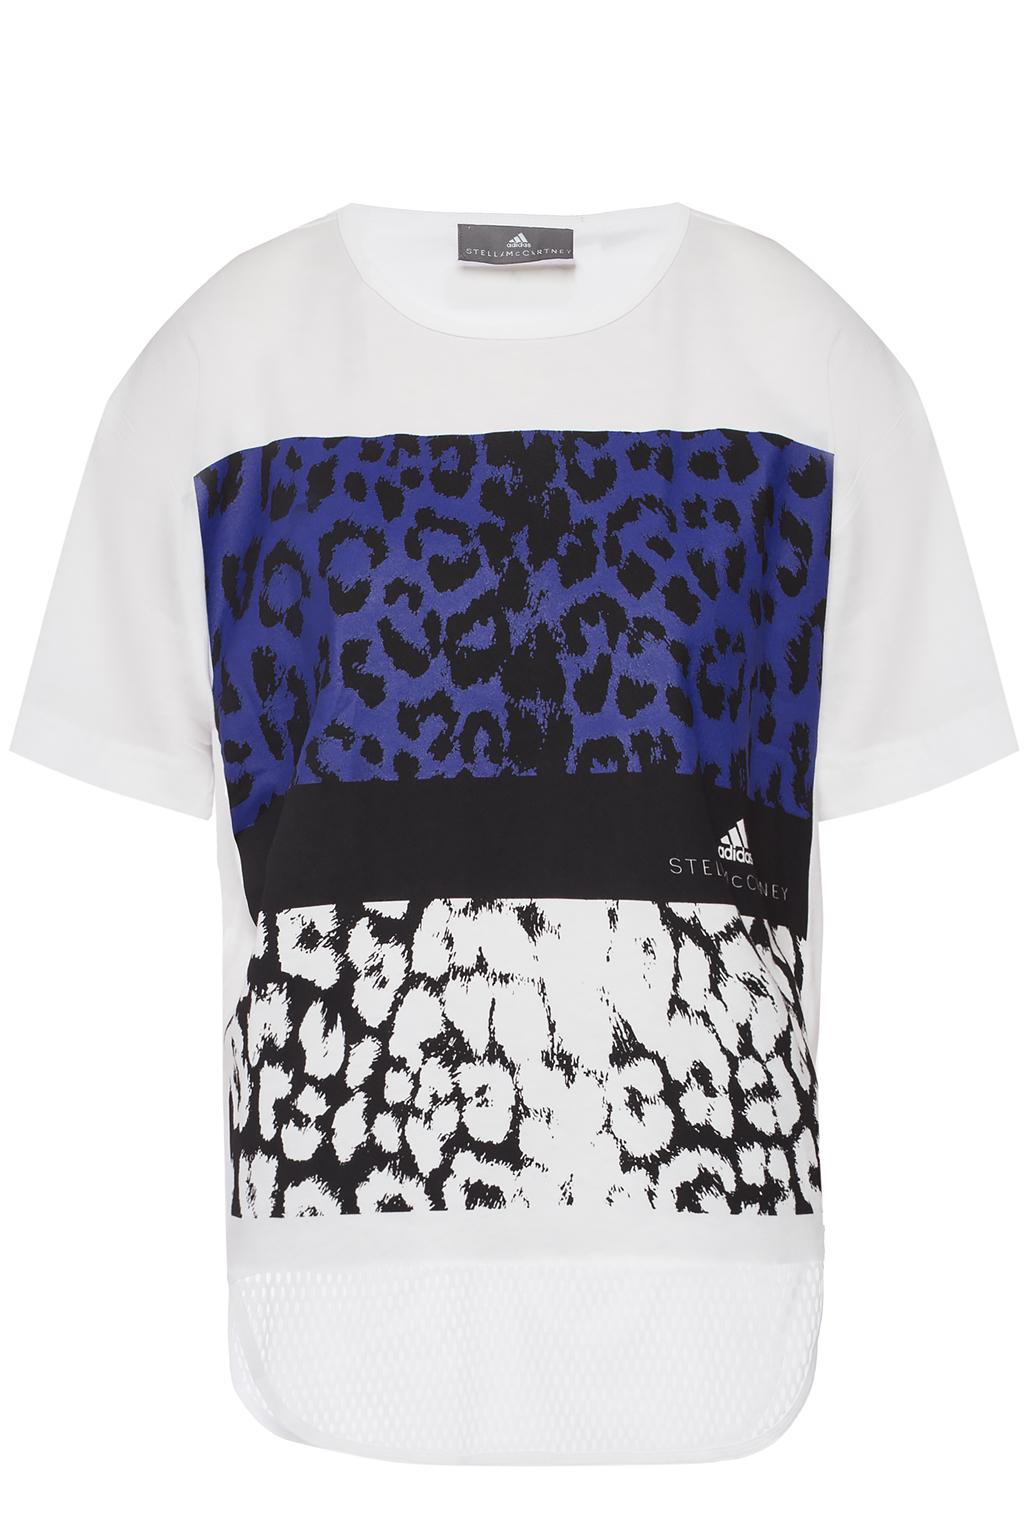 leopard print adidas t shirt